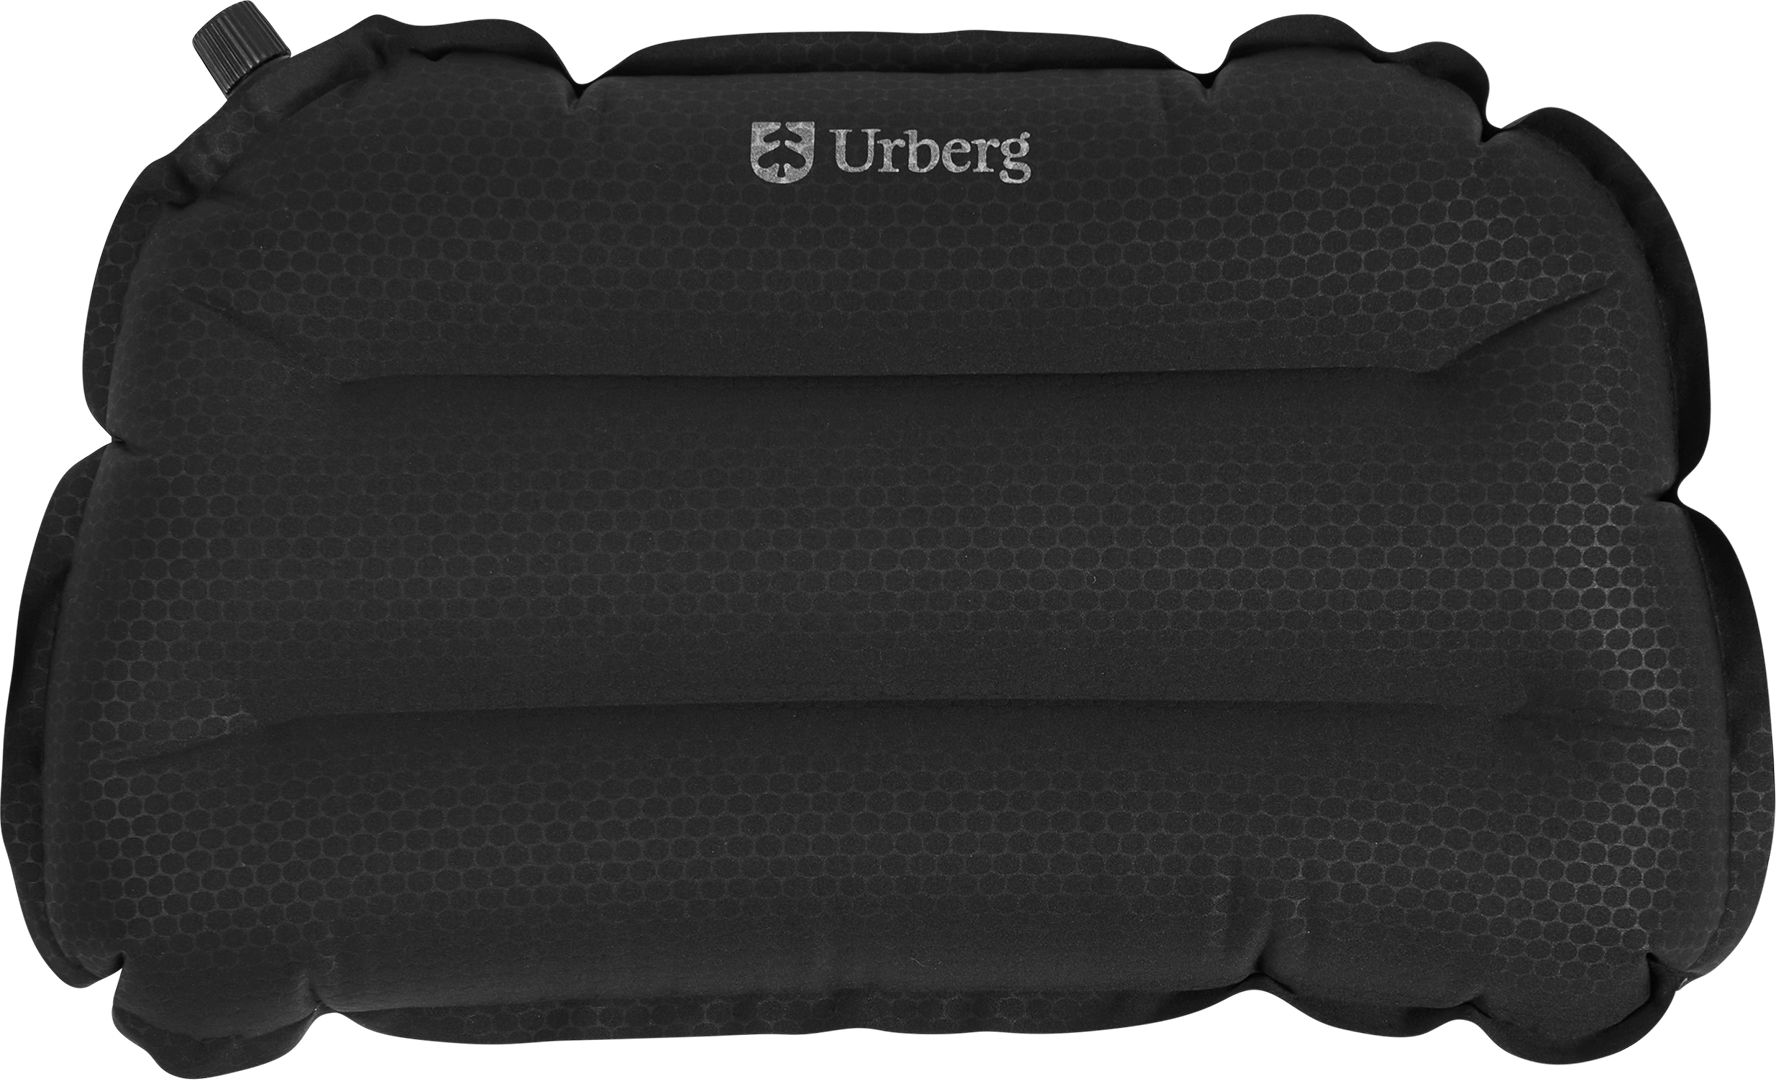 Urberg Air Pillow Jet Black